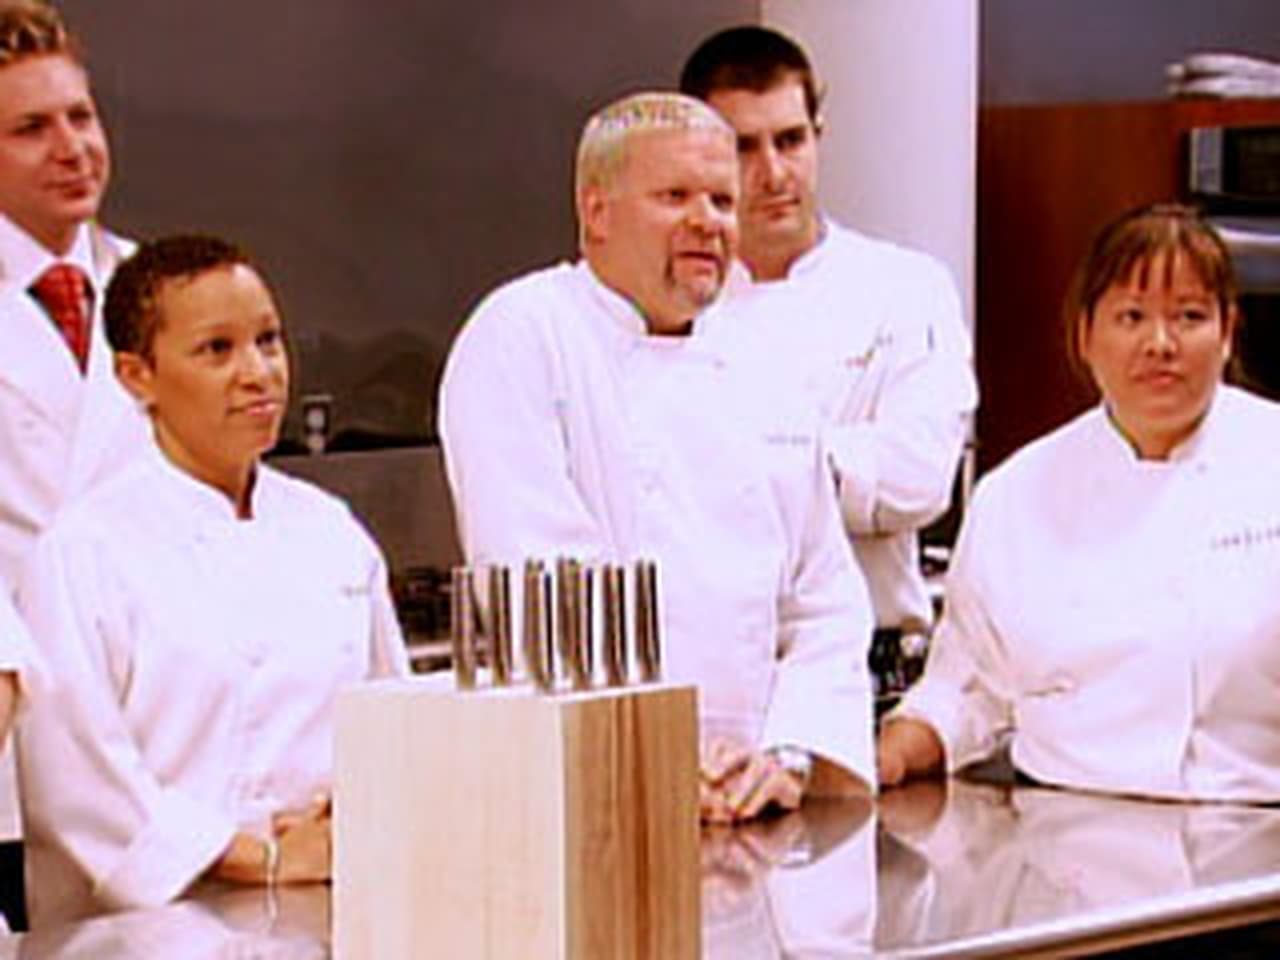 Top Chef - Season 1 Episode 5 : Blind Confusion